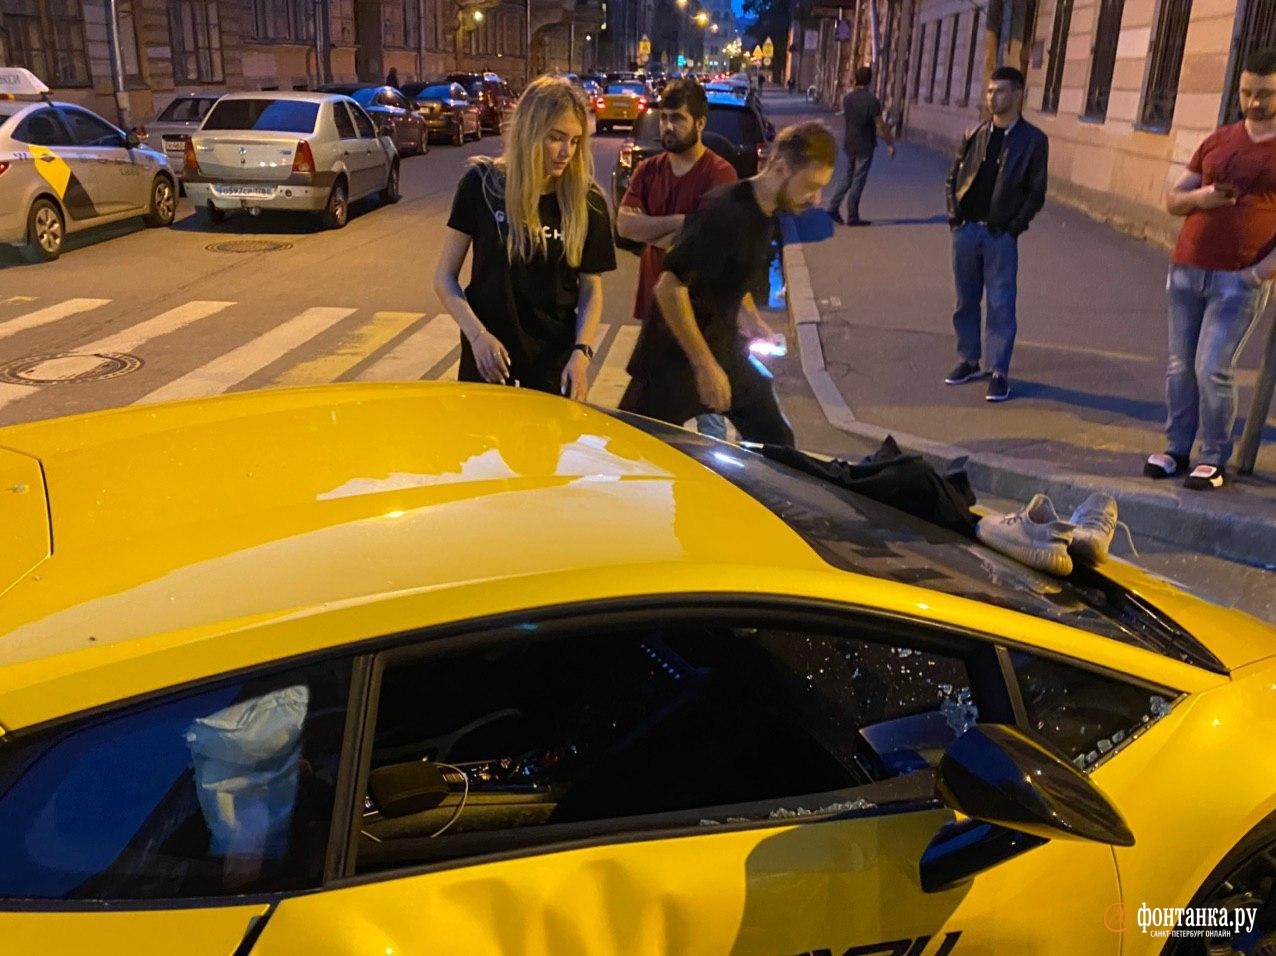 Жёлтый Lamborghini затормозил о тротуар в центре Петербурга. В ожидании служб на капоте отдыхает девушка без ботинок